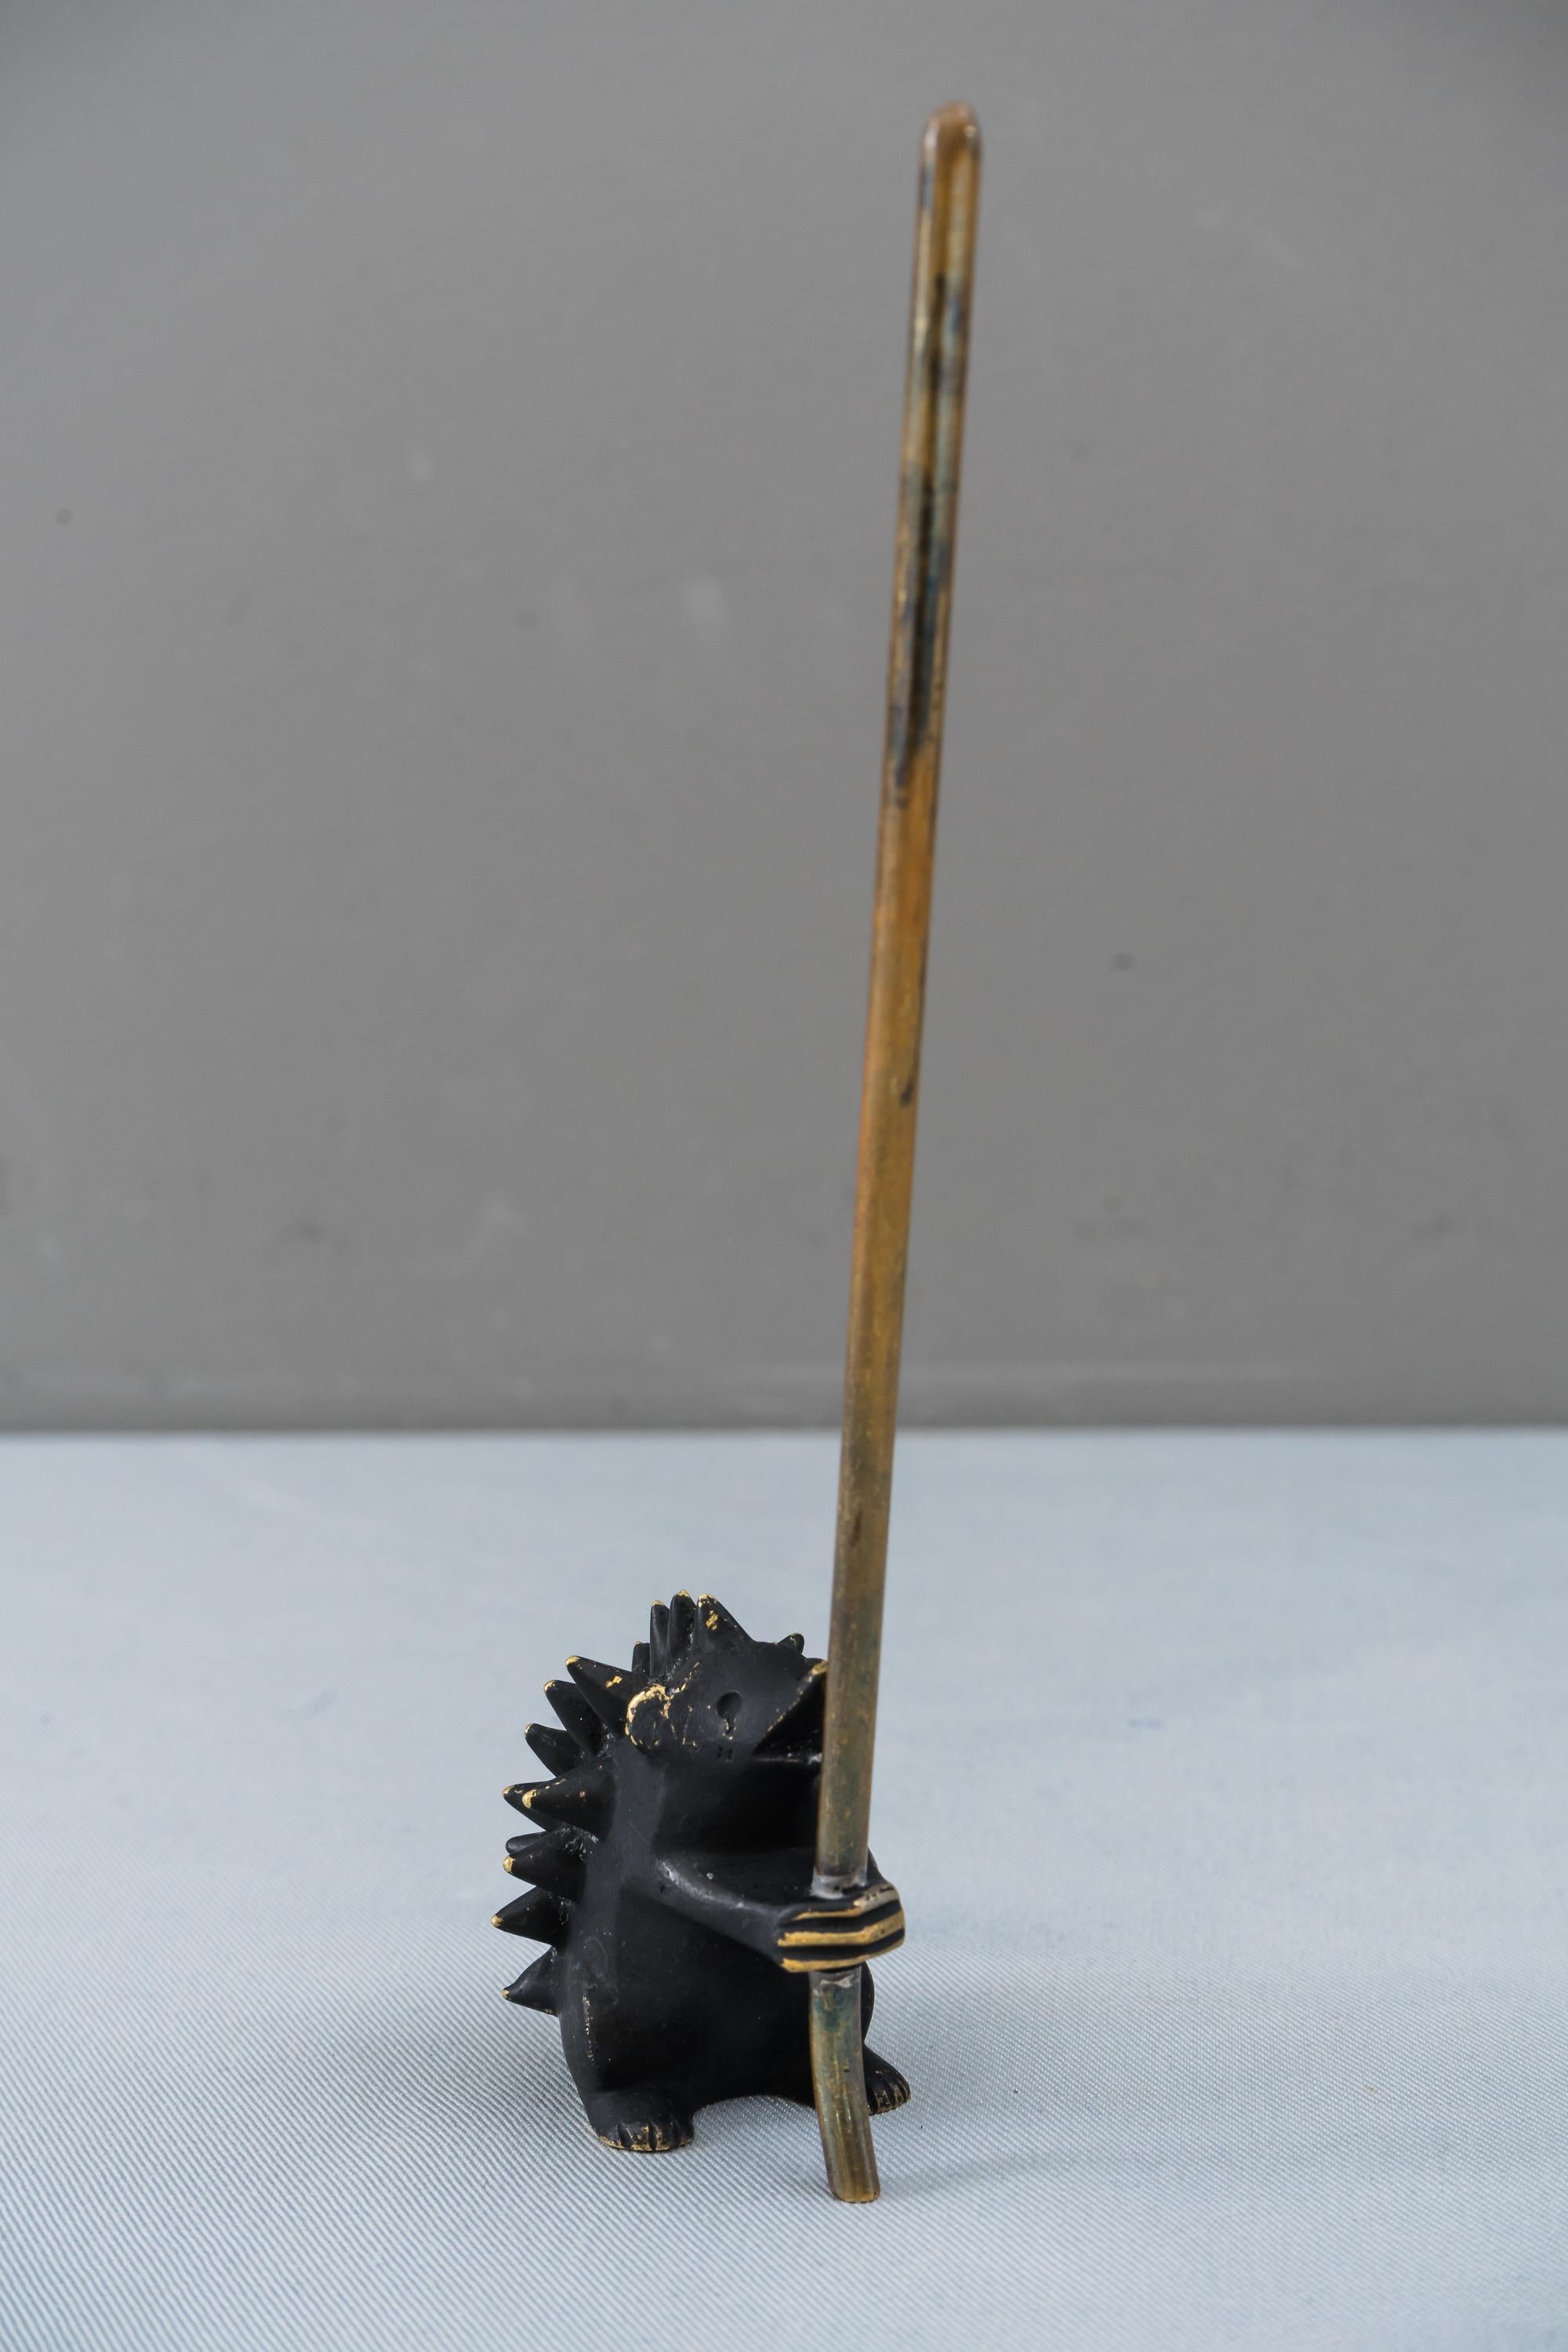 Blackened Walter Bosse Brass Hedgehog Figurine Pretzel Holder, Ring Holder